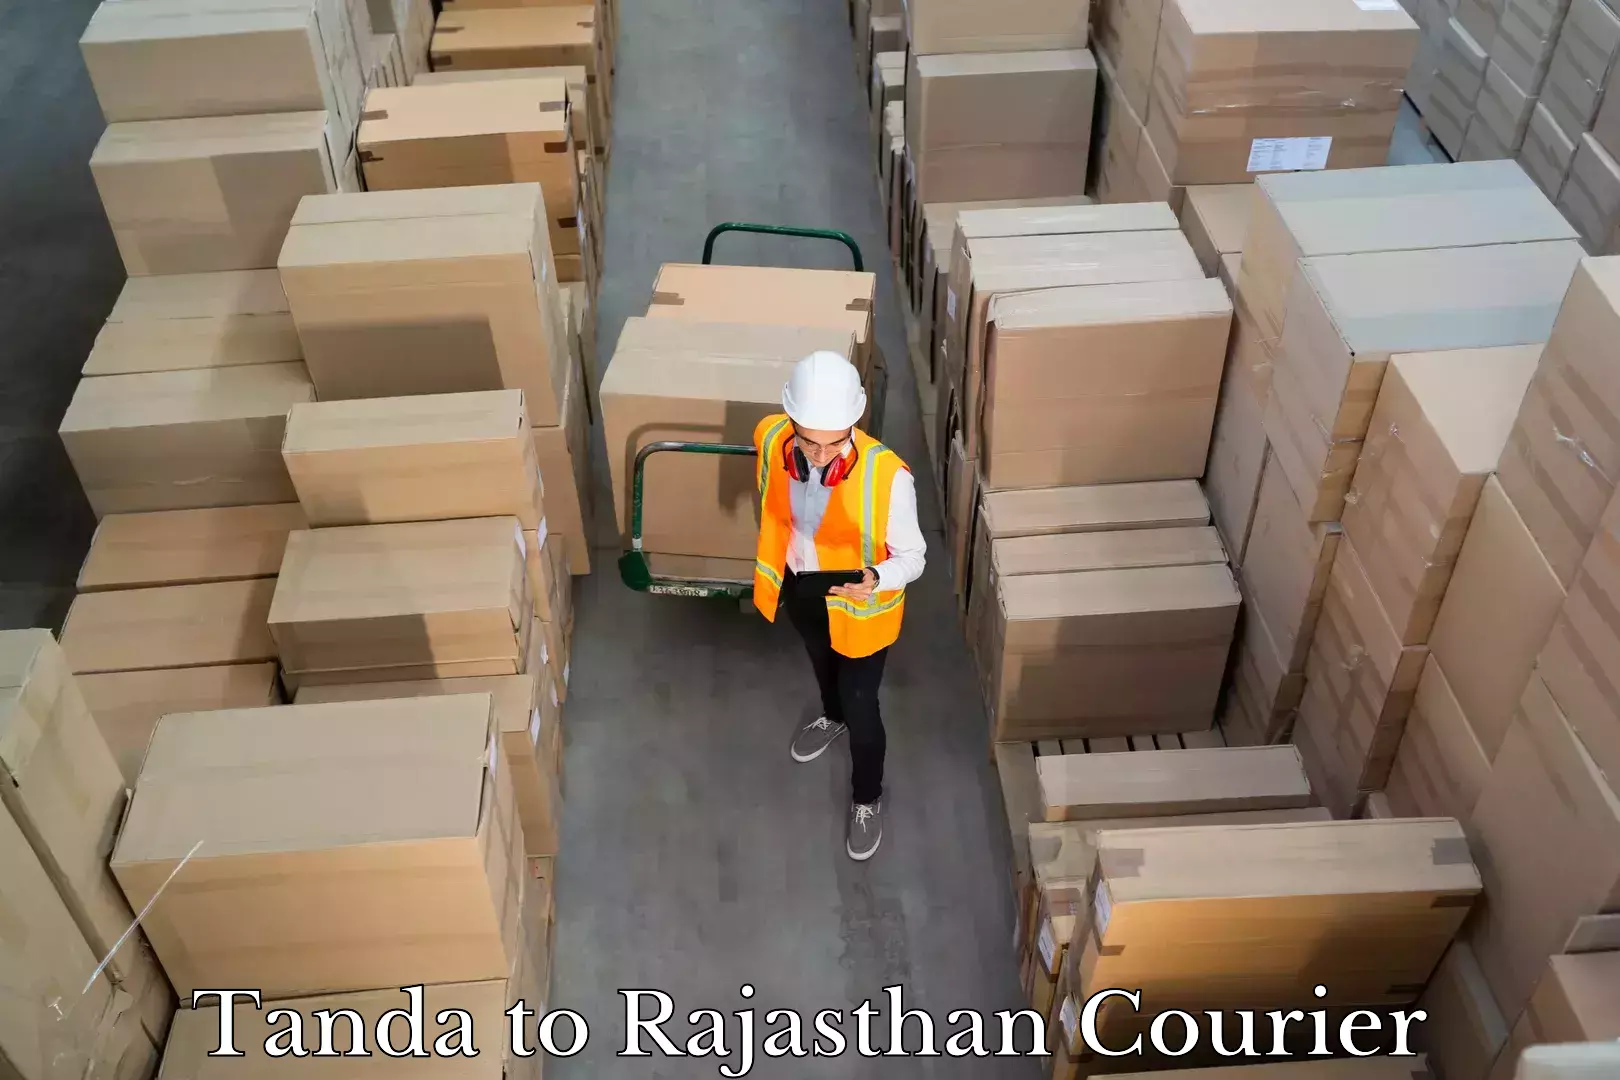 Luggage shipment tracking Tanda to Jaipur